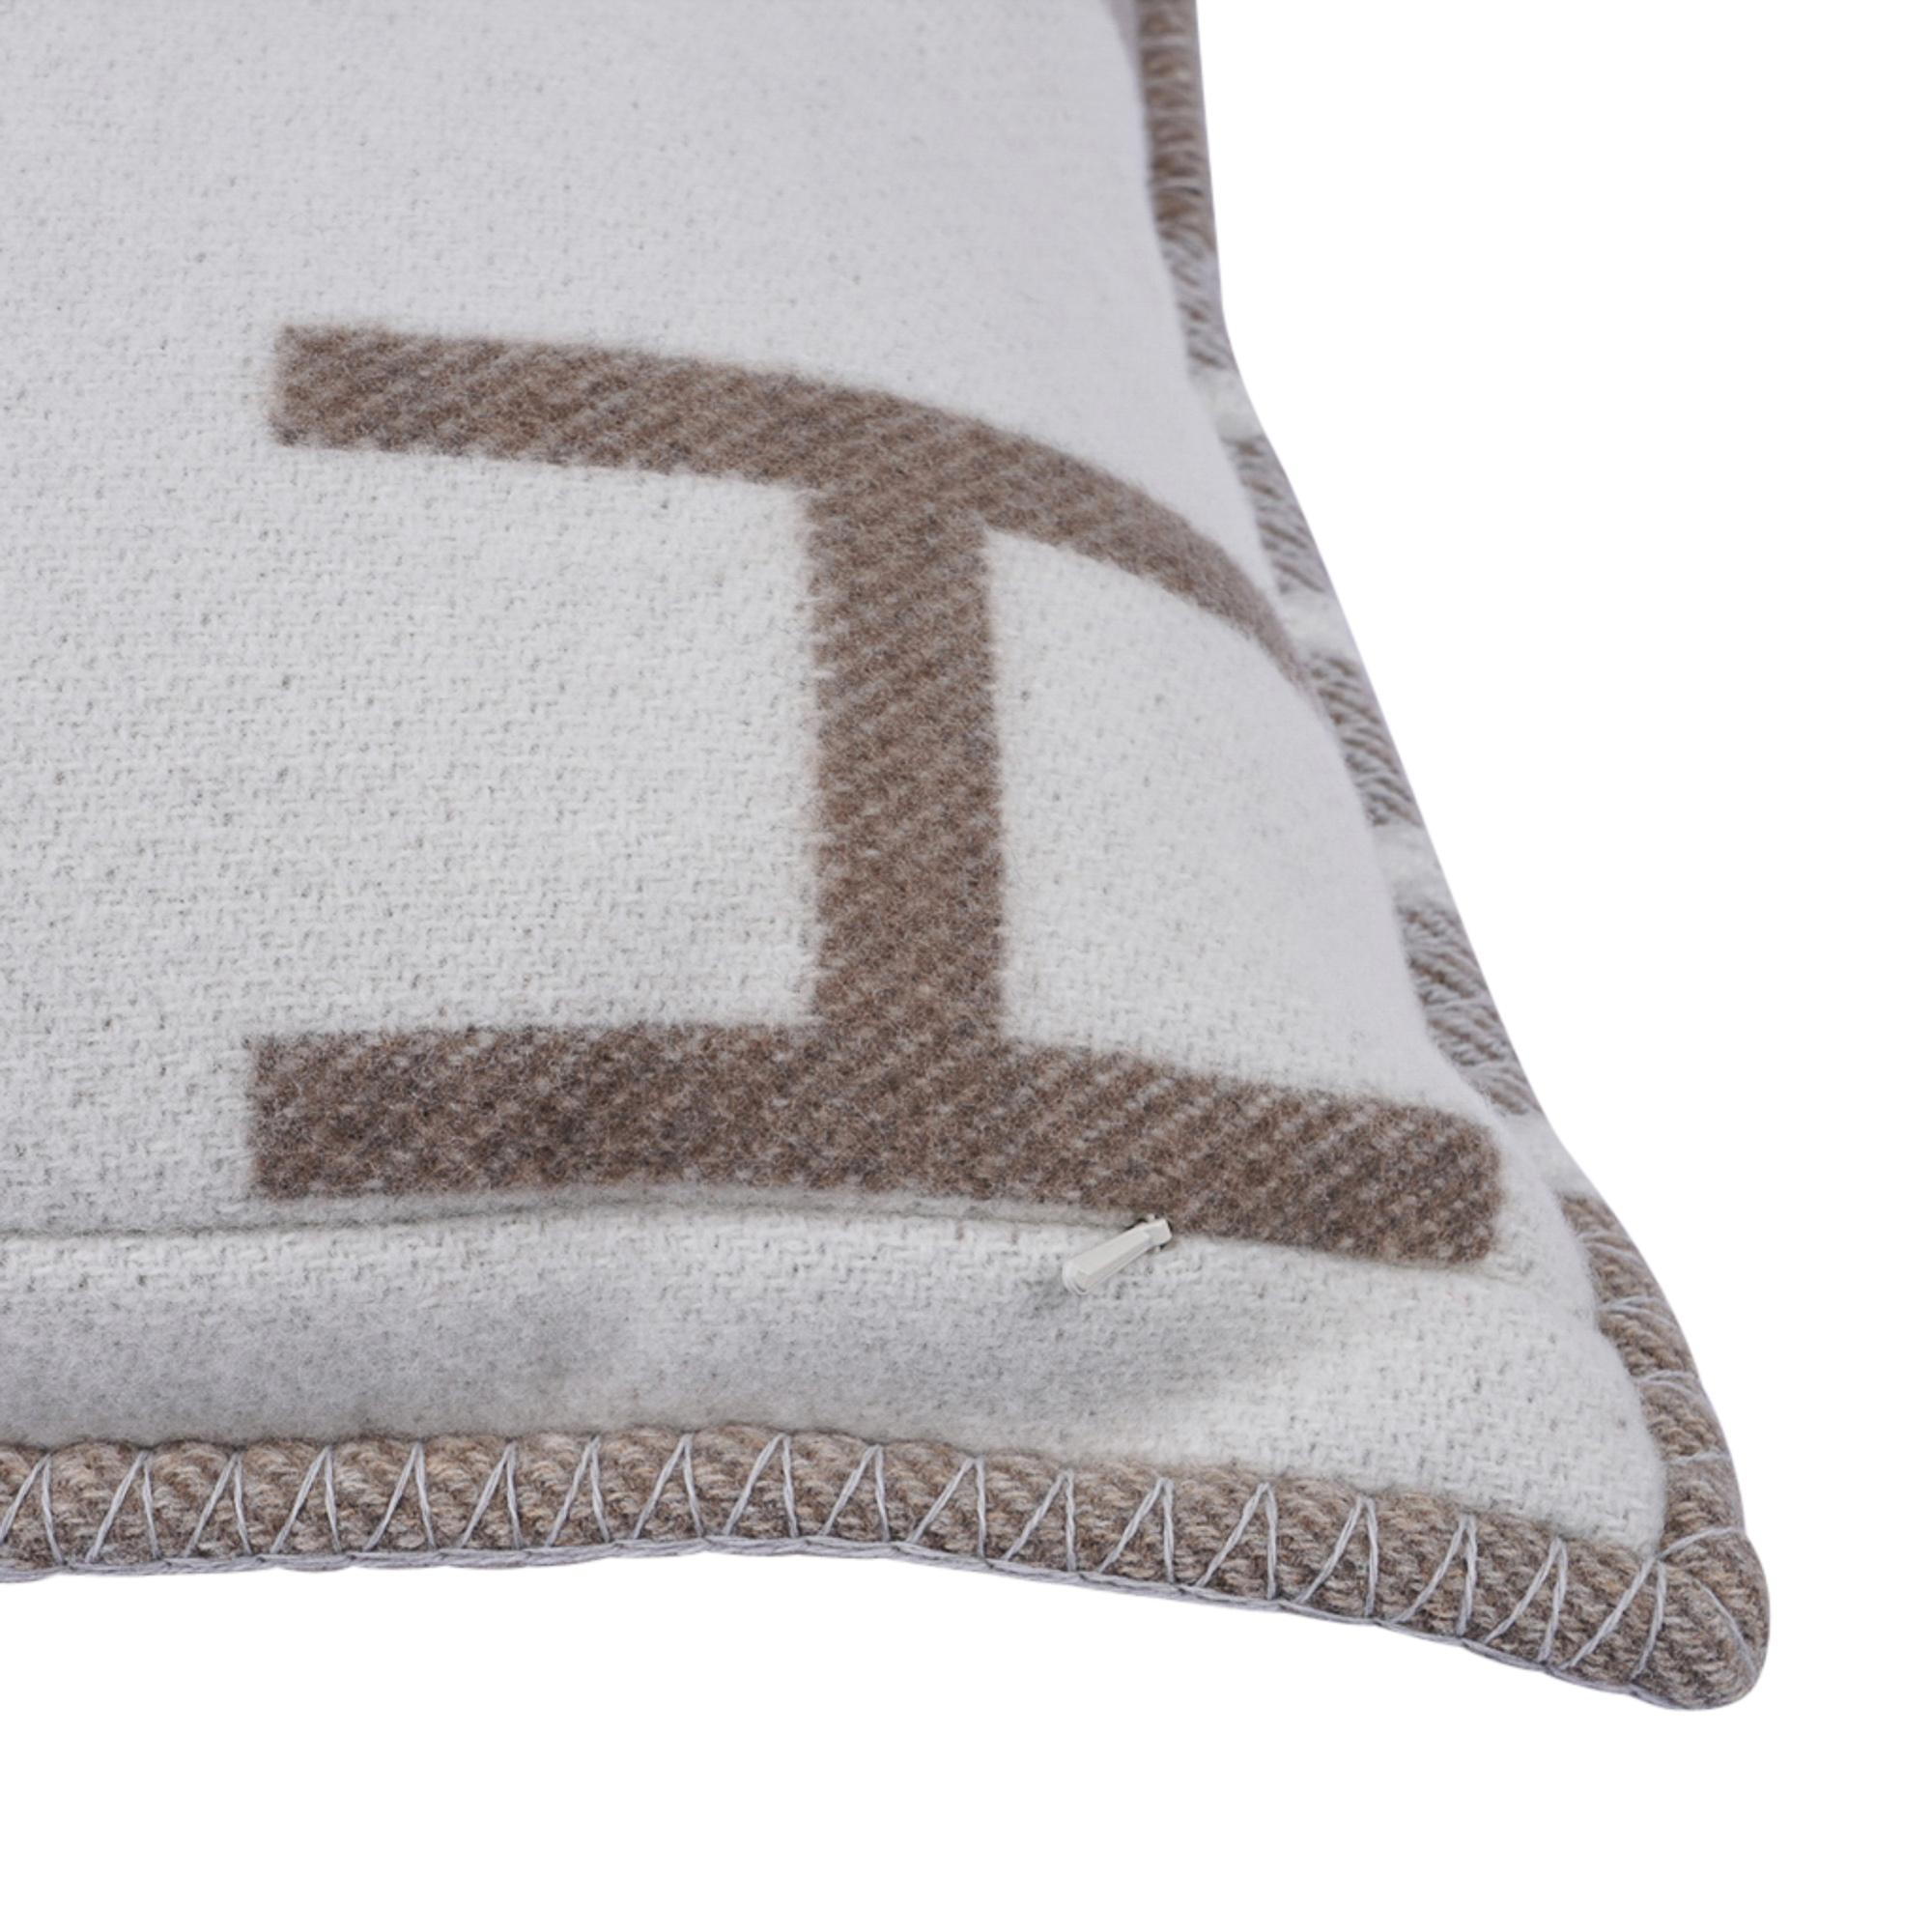 Women's or Men's Hermes Pillow Avalon Vibration Naturel Set of Two New w/ Sleepers